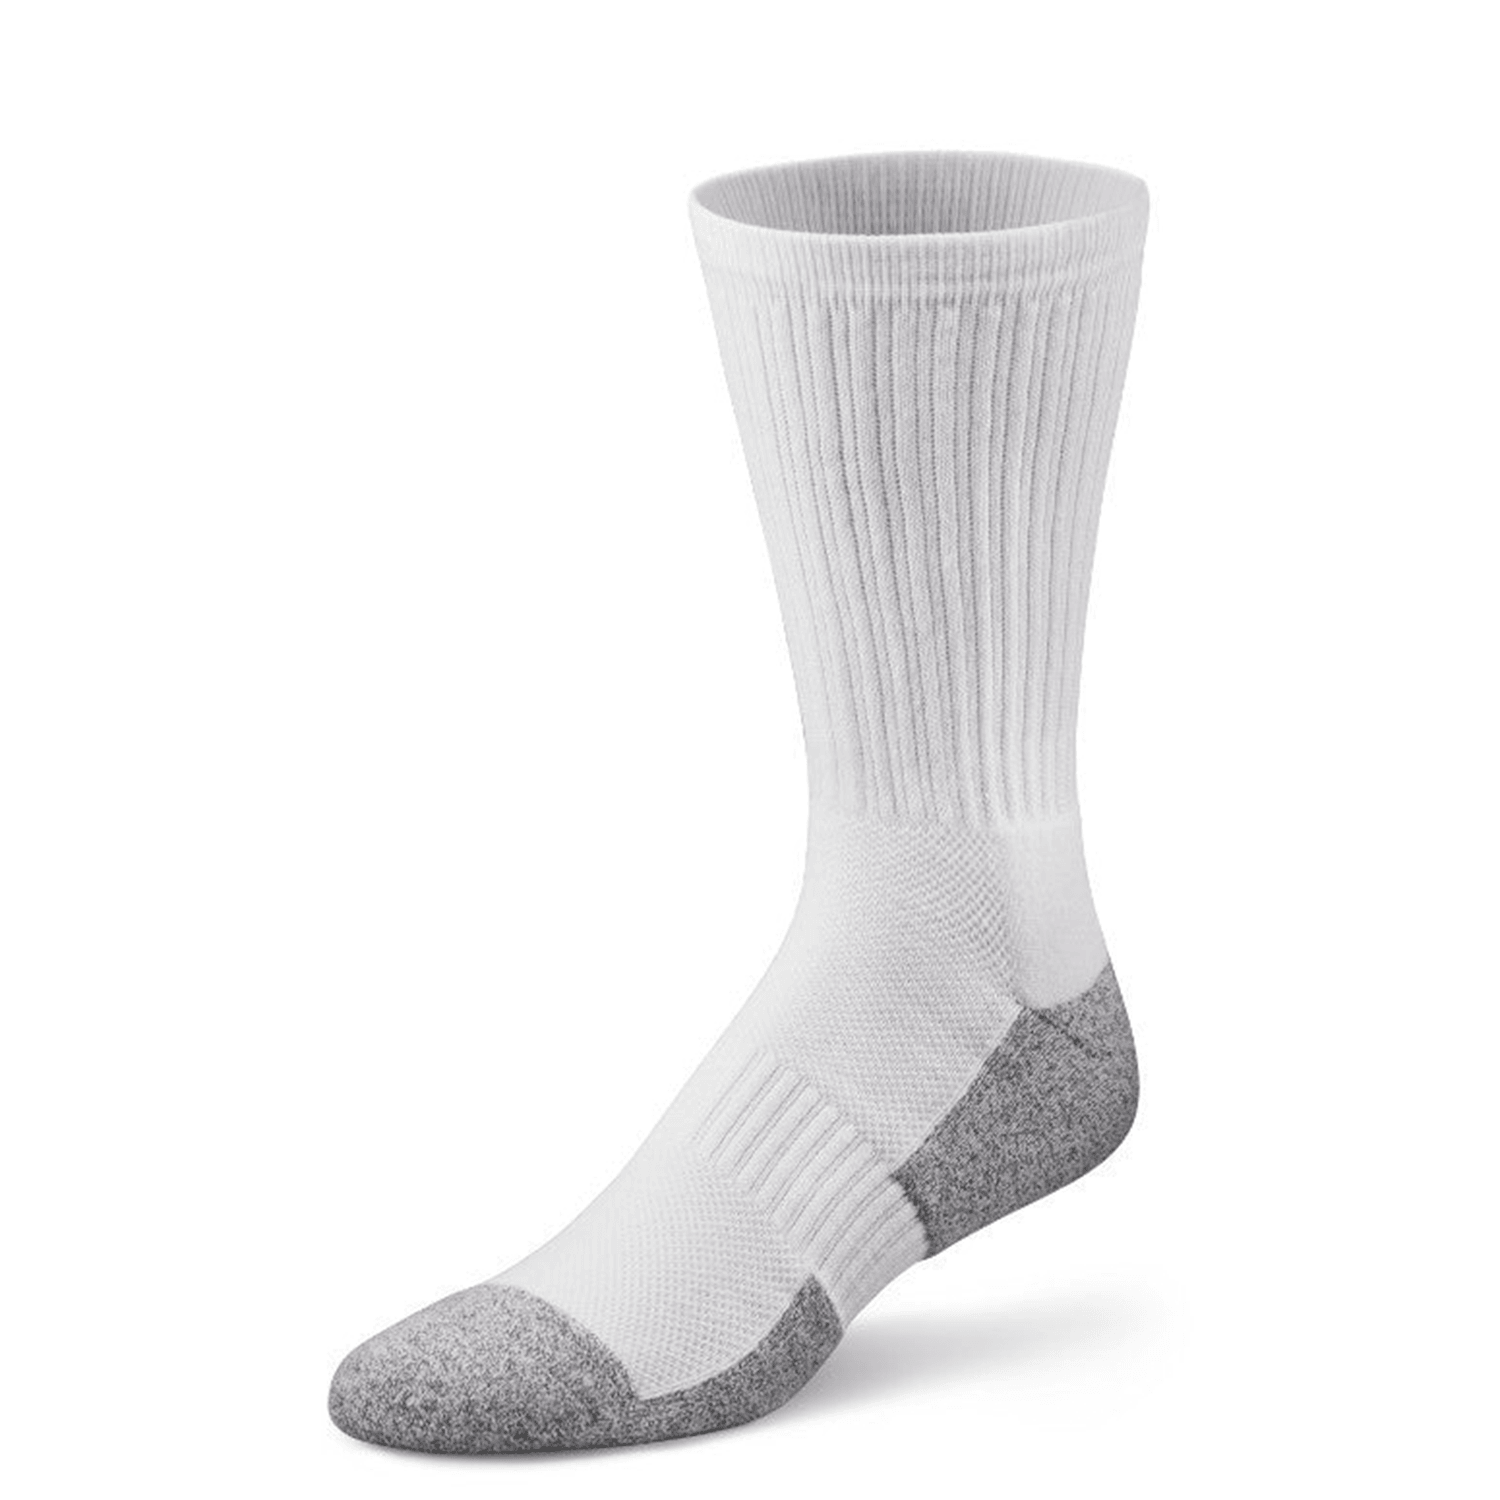 DR. Comfort Bamboo fibre crew length medical socks - Anjelstore 